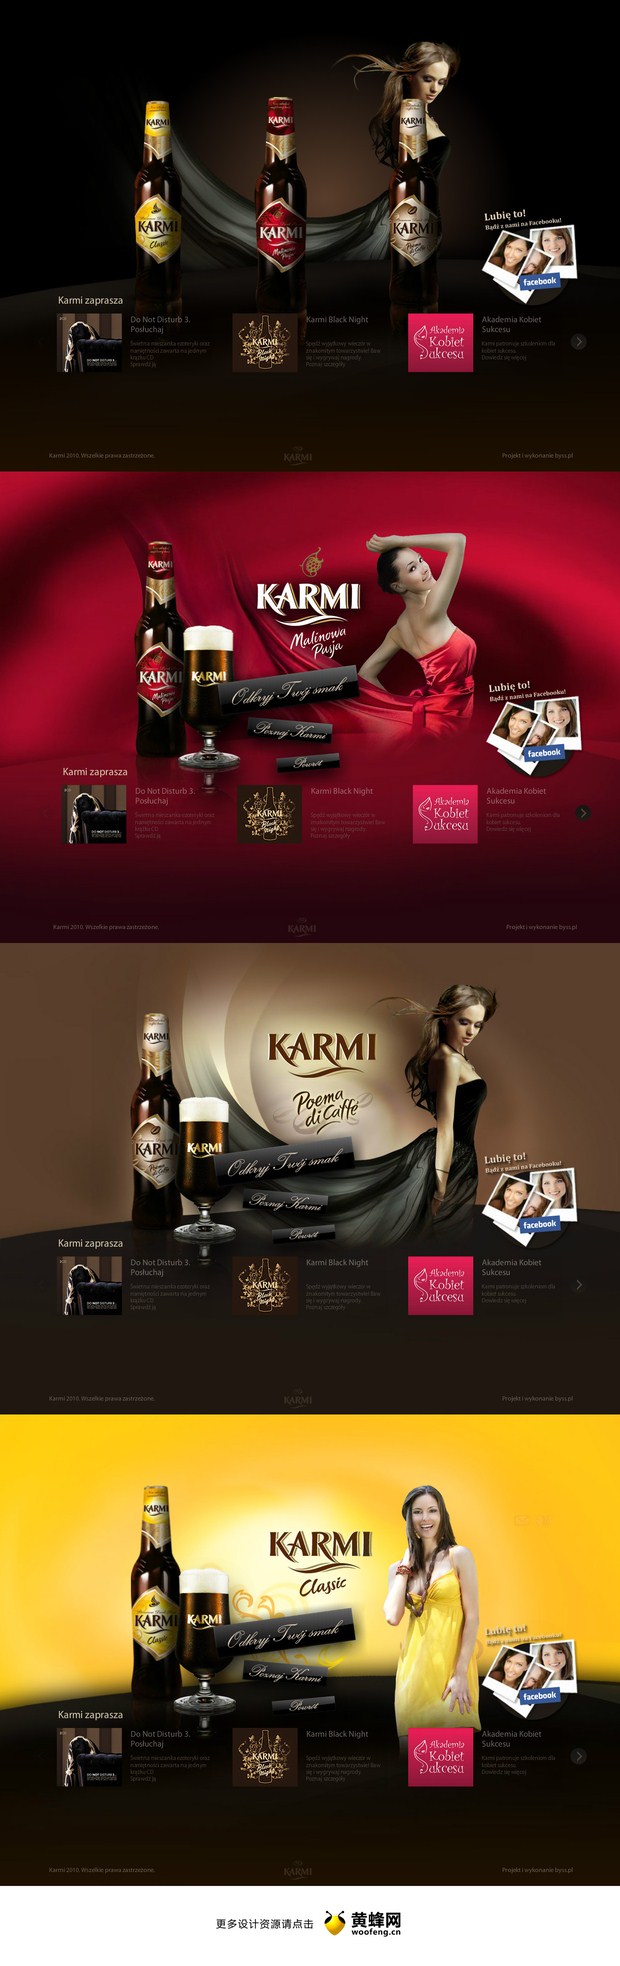 karmi web design inspiration